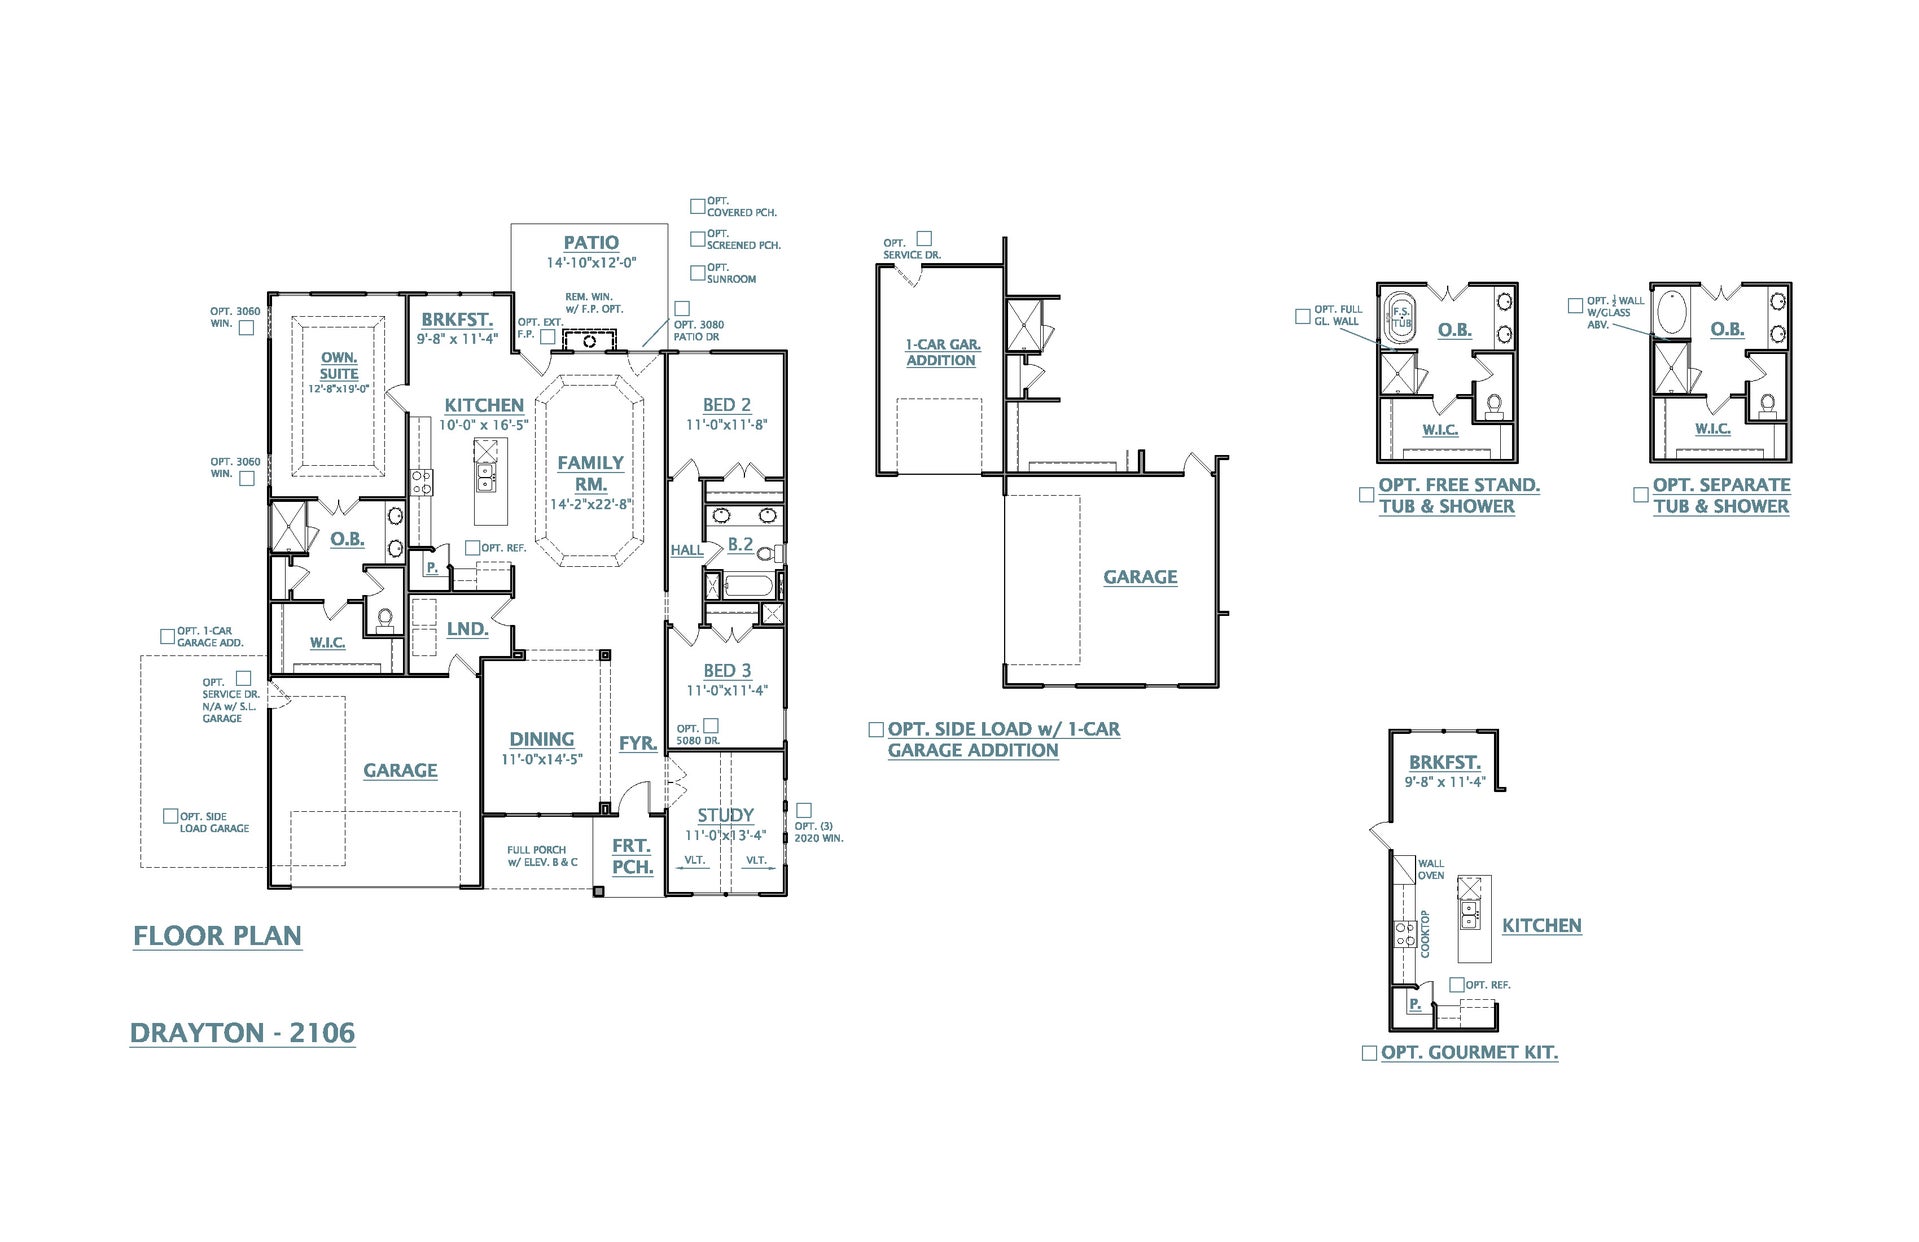 Duncan New Home Drayton Floorplan